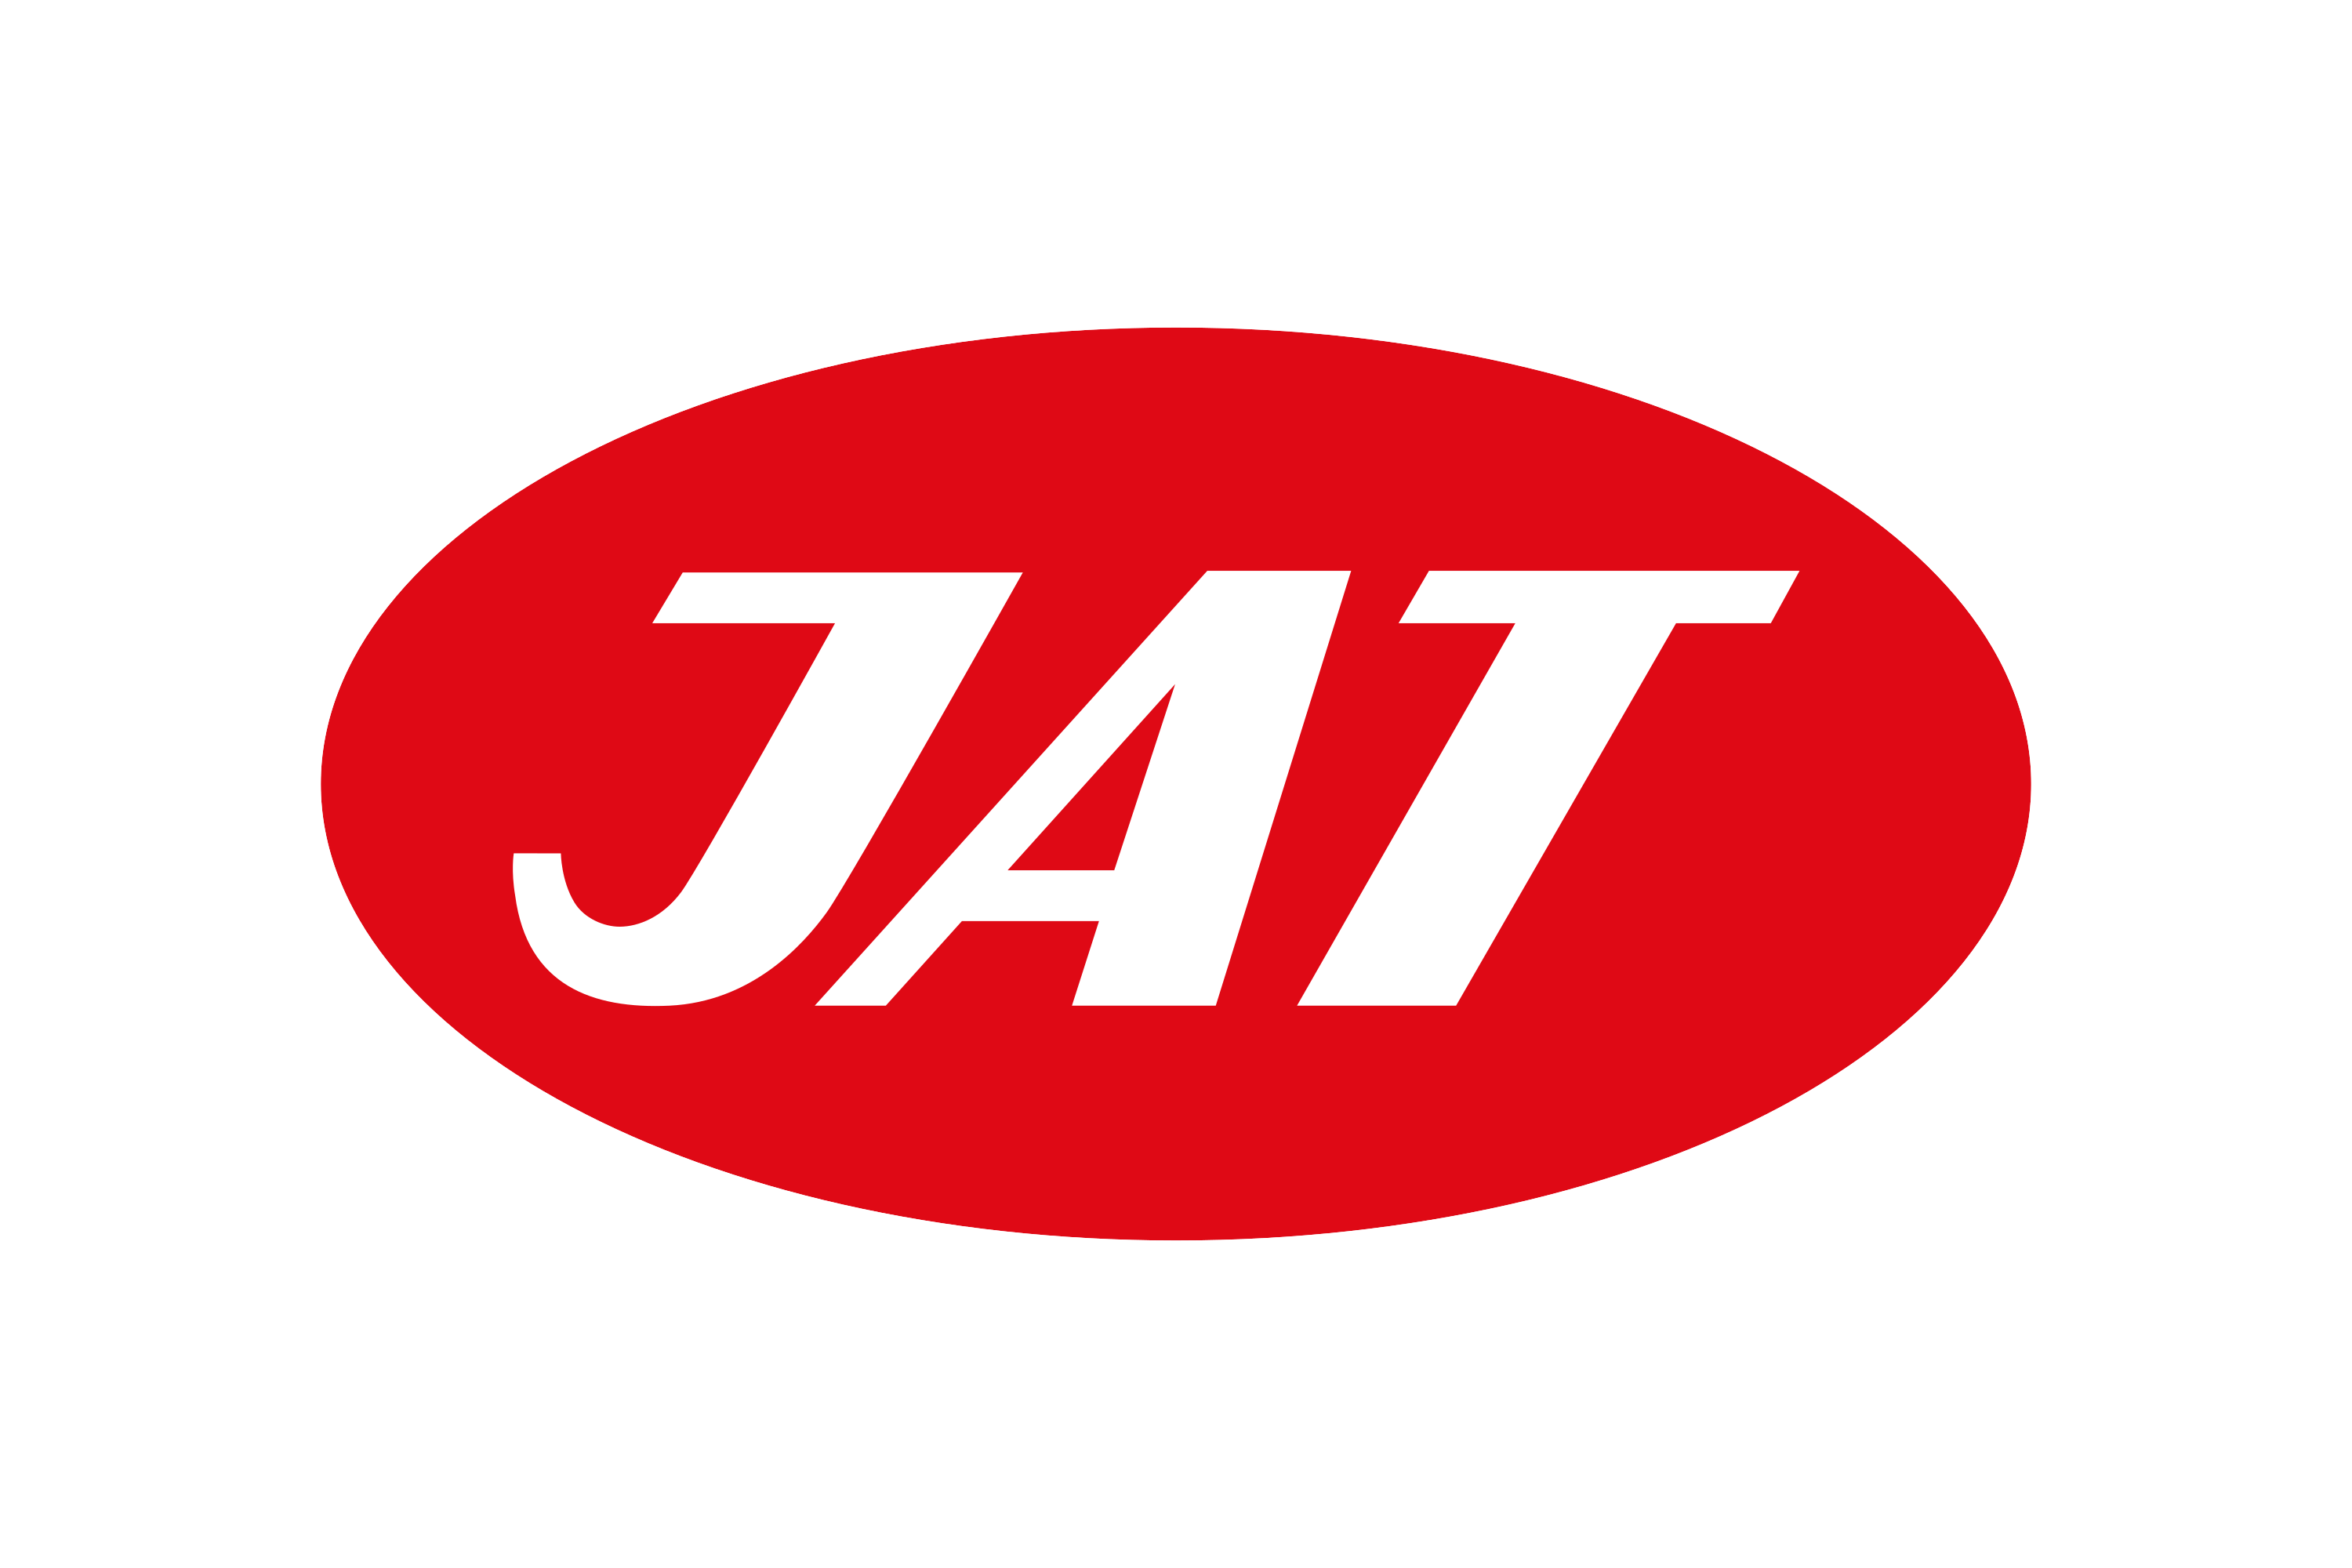 Download Jat Airways Logo in SVG Vector or PNG File Format - Logo.wine